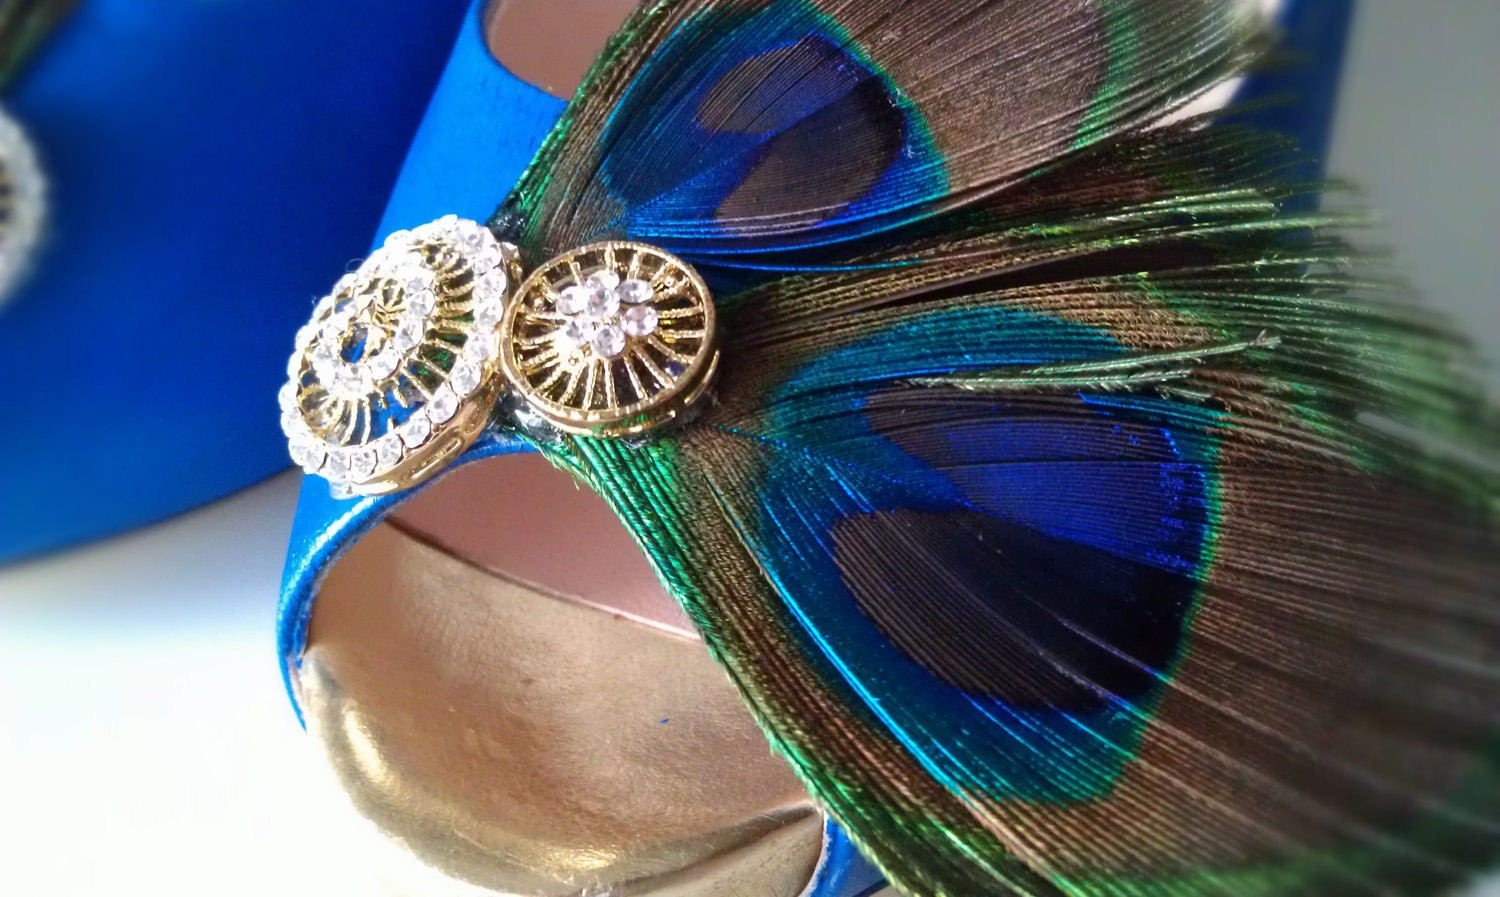 Peacock Blue Shoes Peacock Wedding Shoes Peacock Feathers Peacock Wedding 